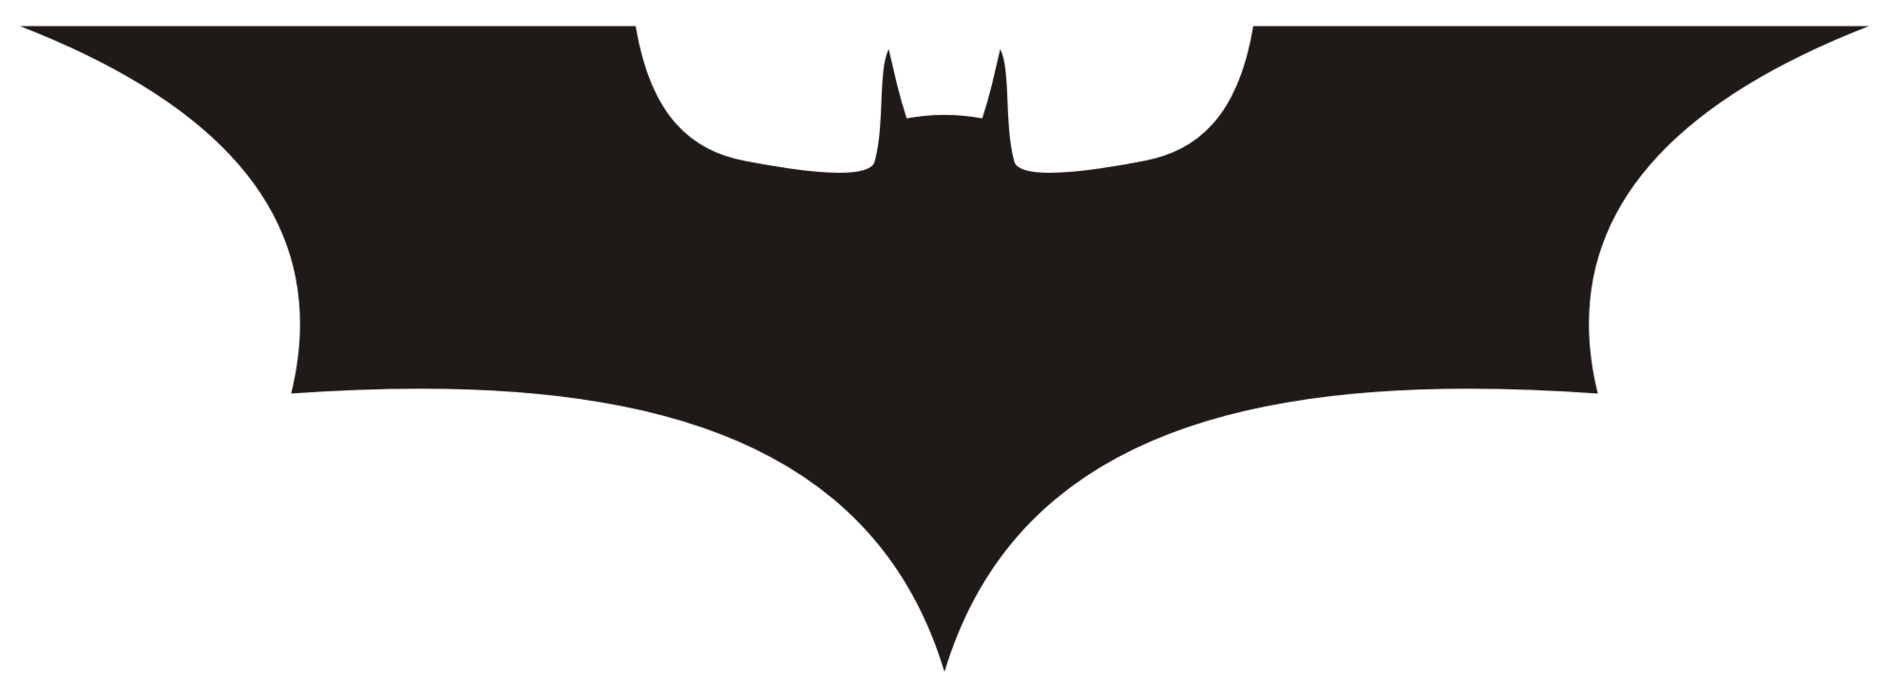 Batman Simbolo Clipart - Free to use Clip Art Resource